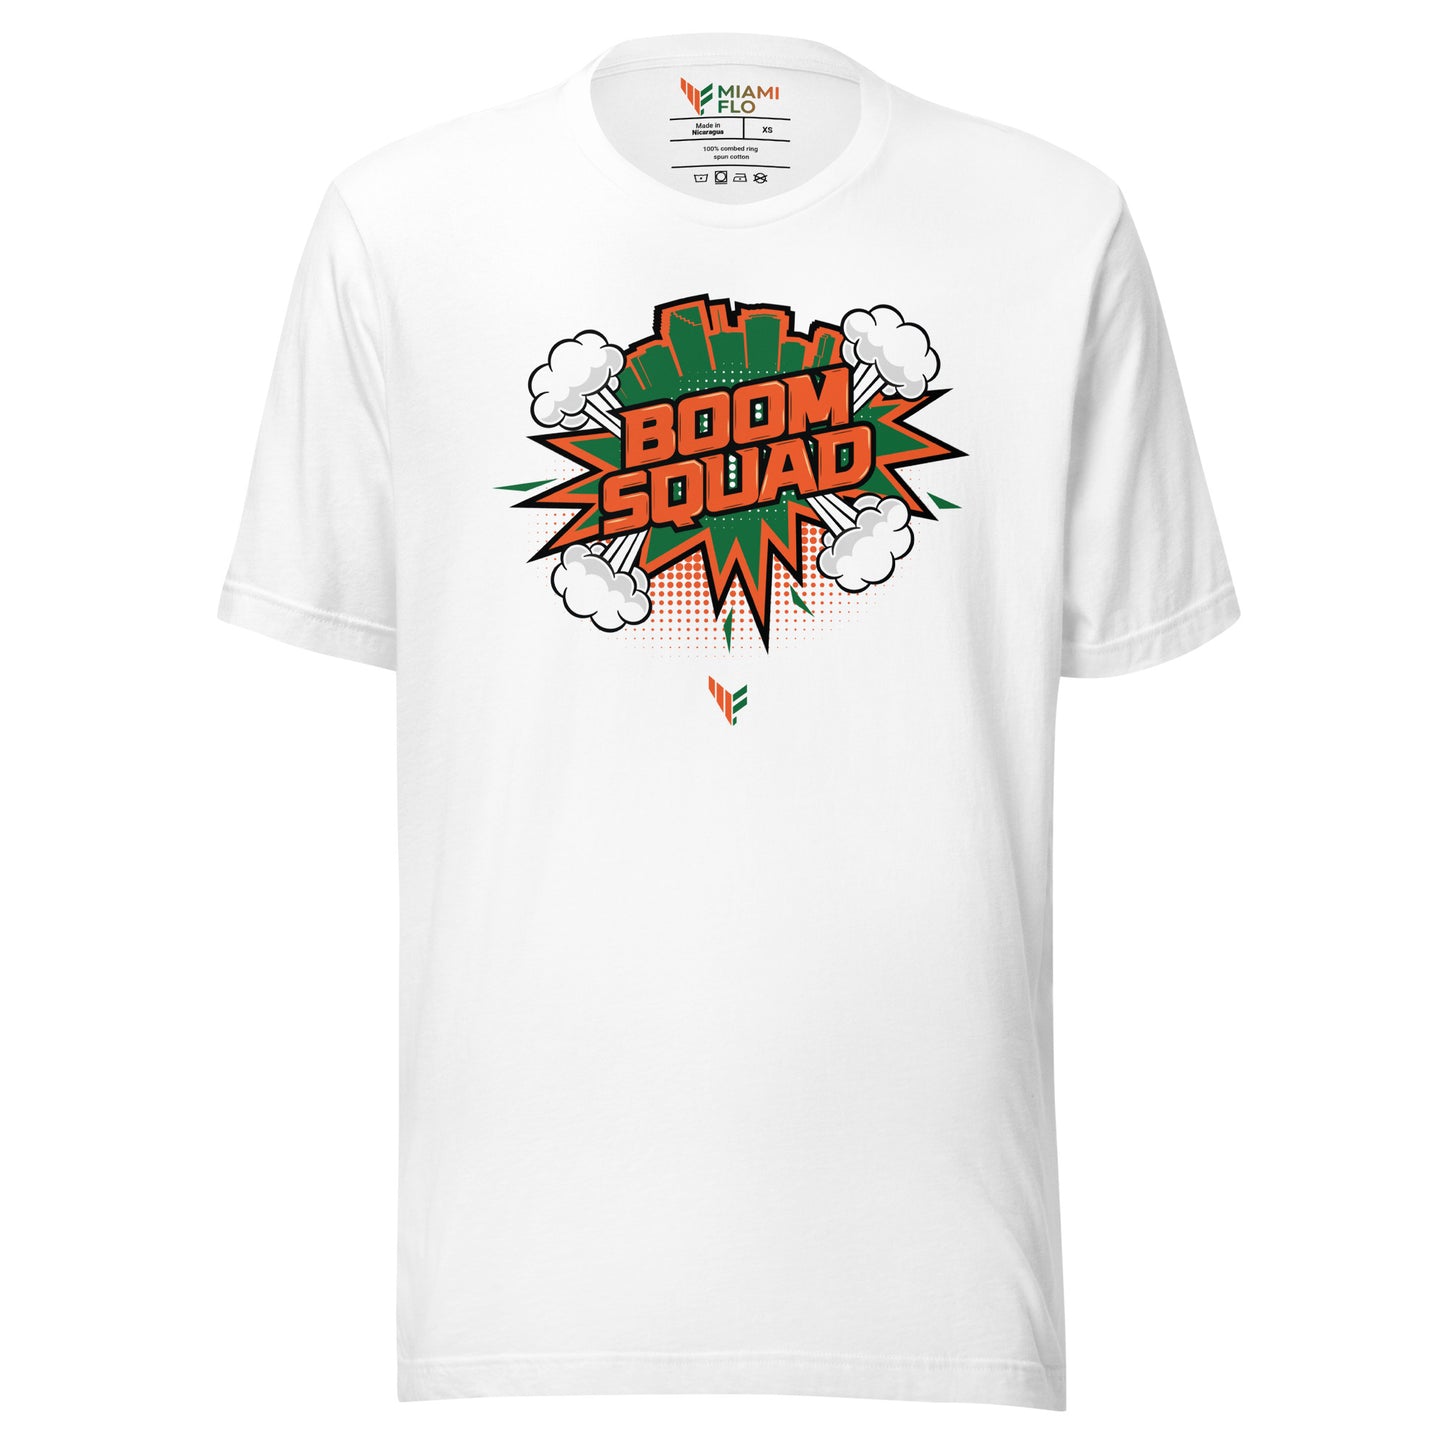 Miami Boom Squad Shirt - Designed By Jas